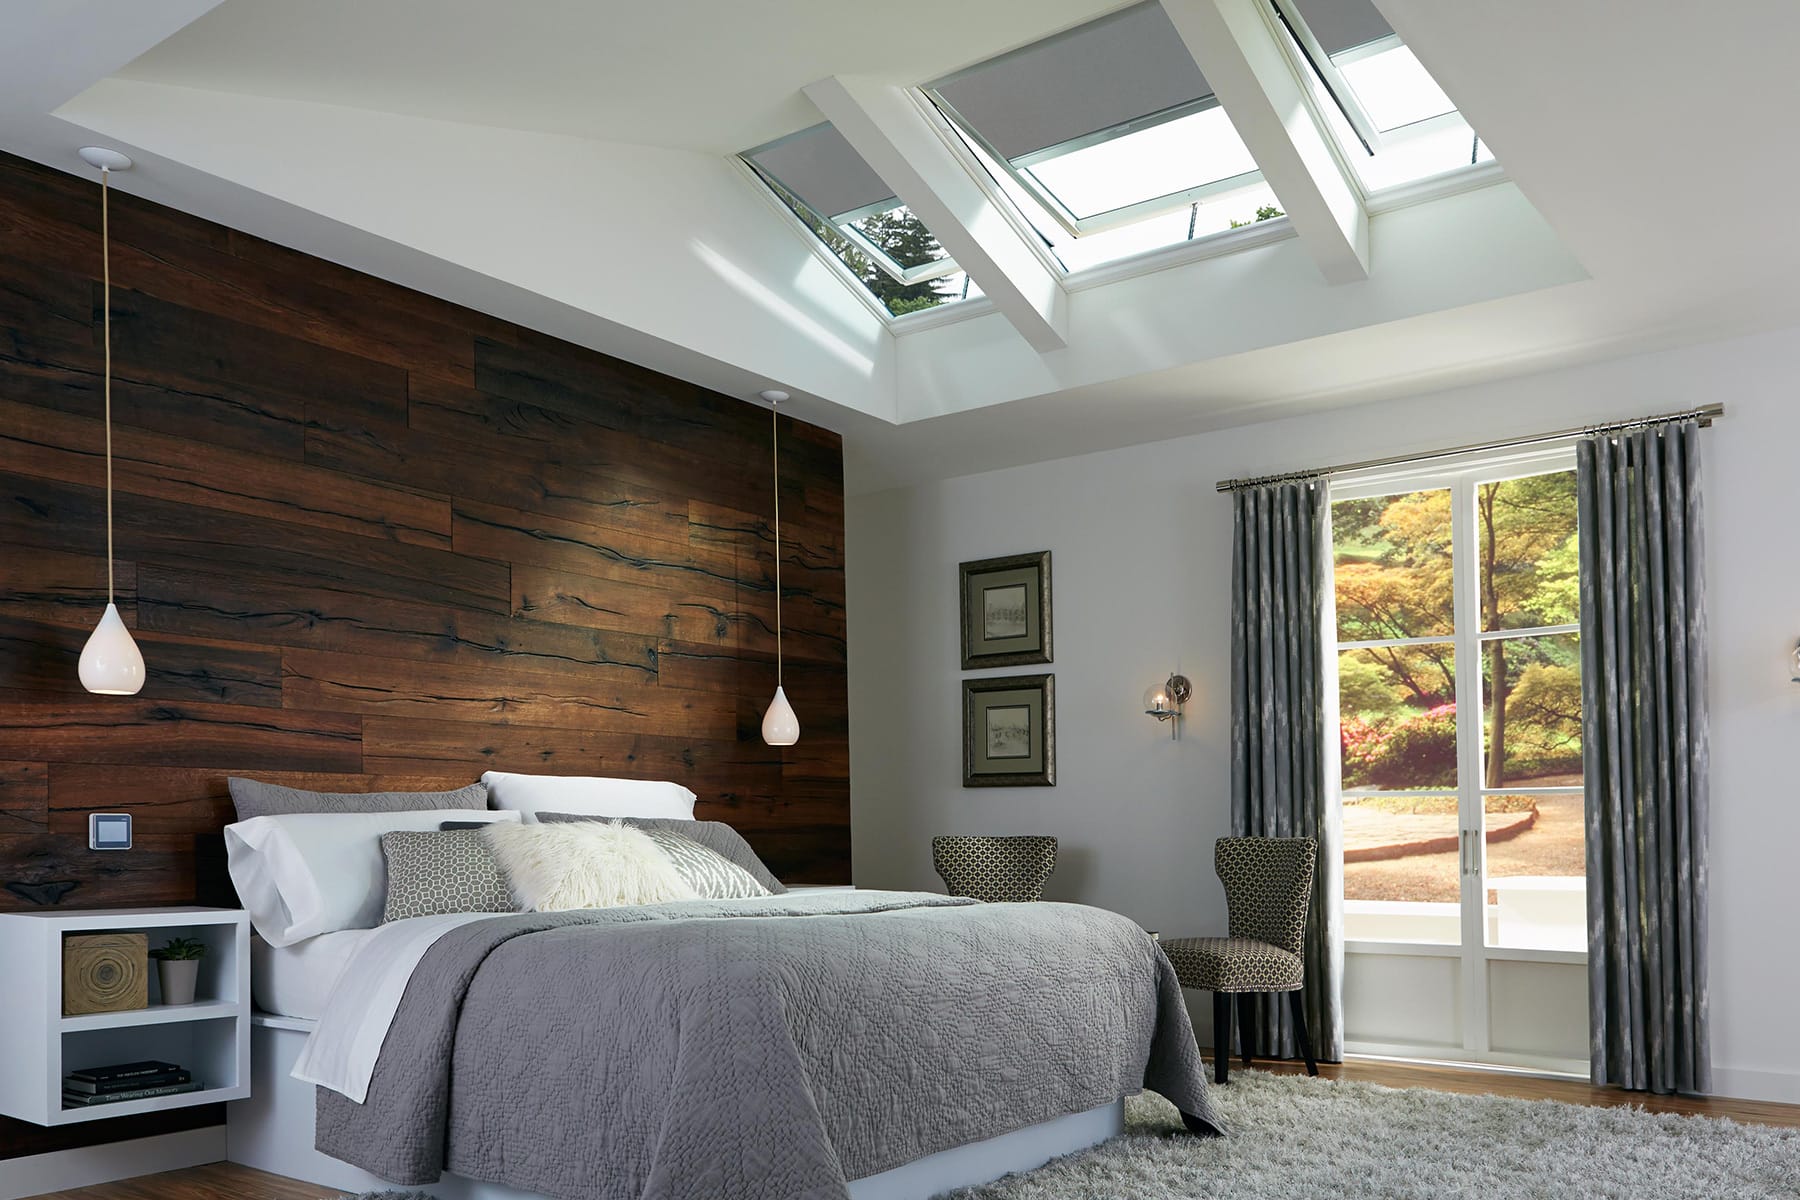 Bedroom With Skylight But No Windows Decoration Minimalist